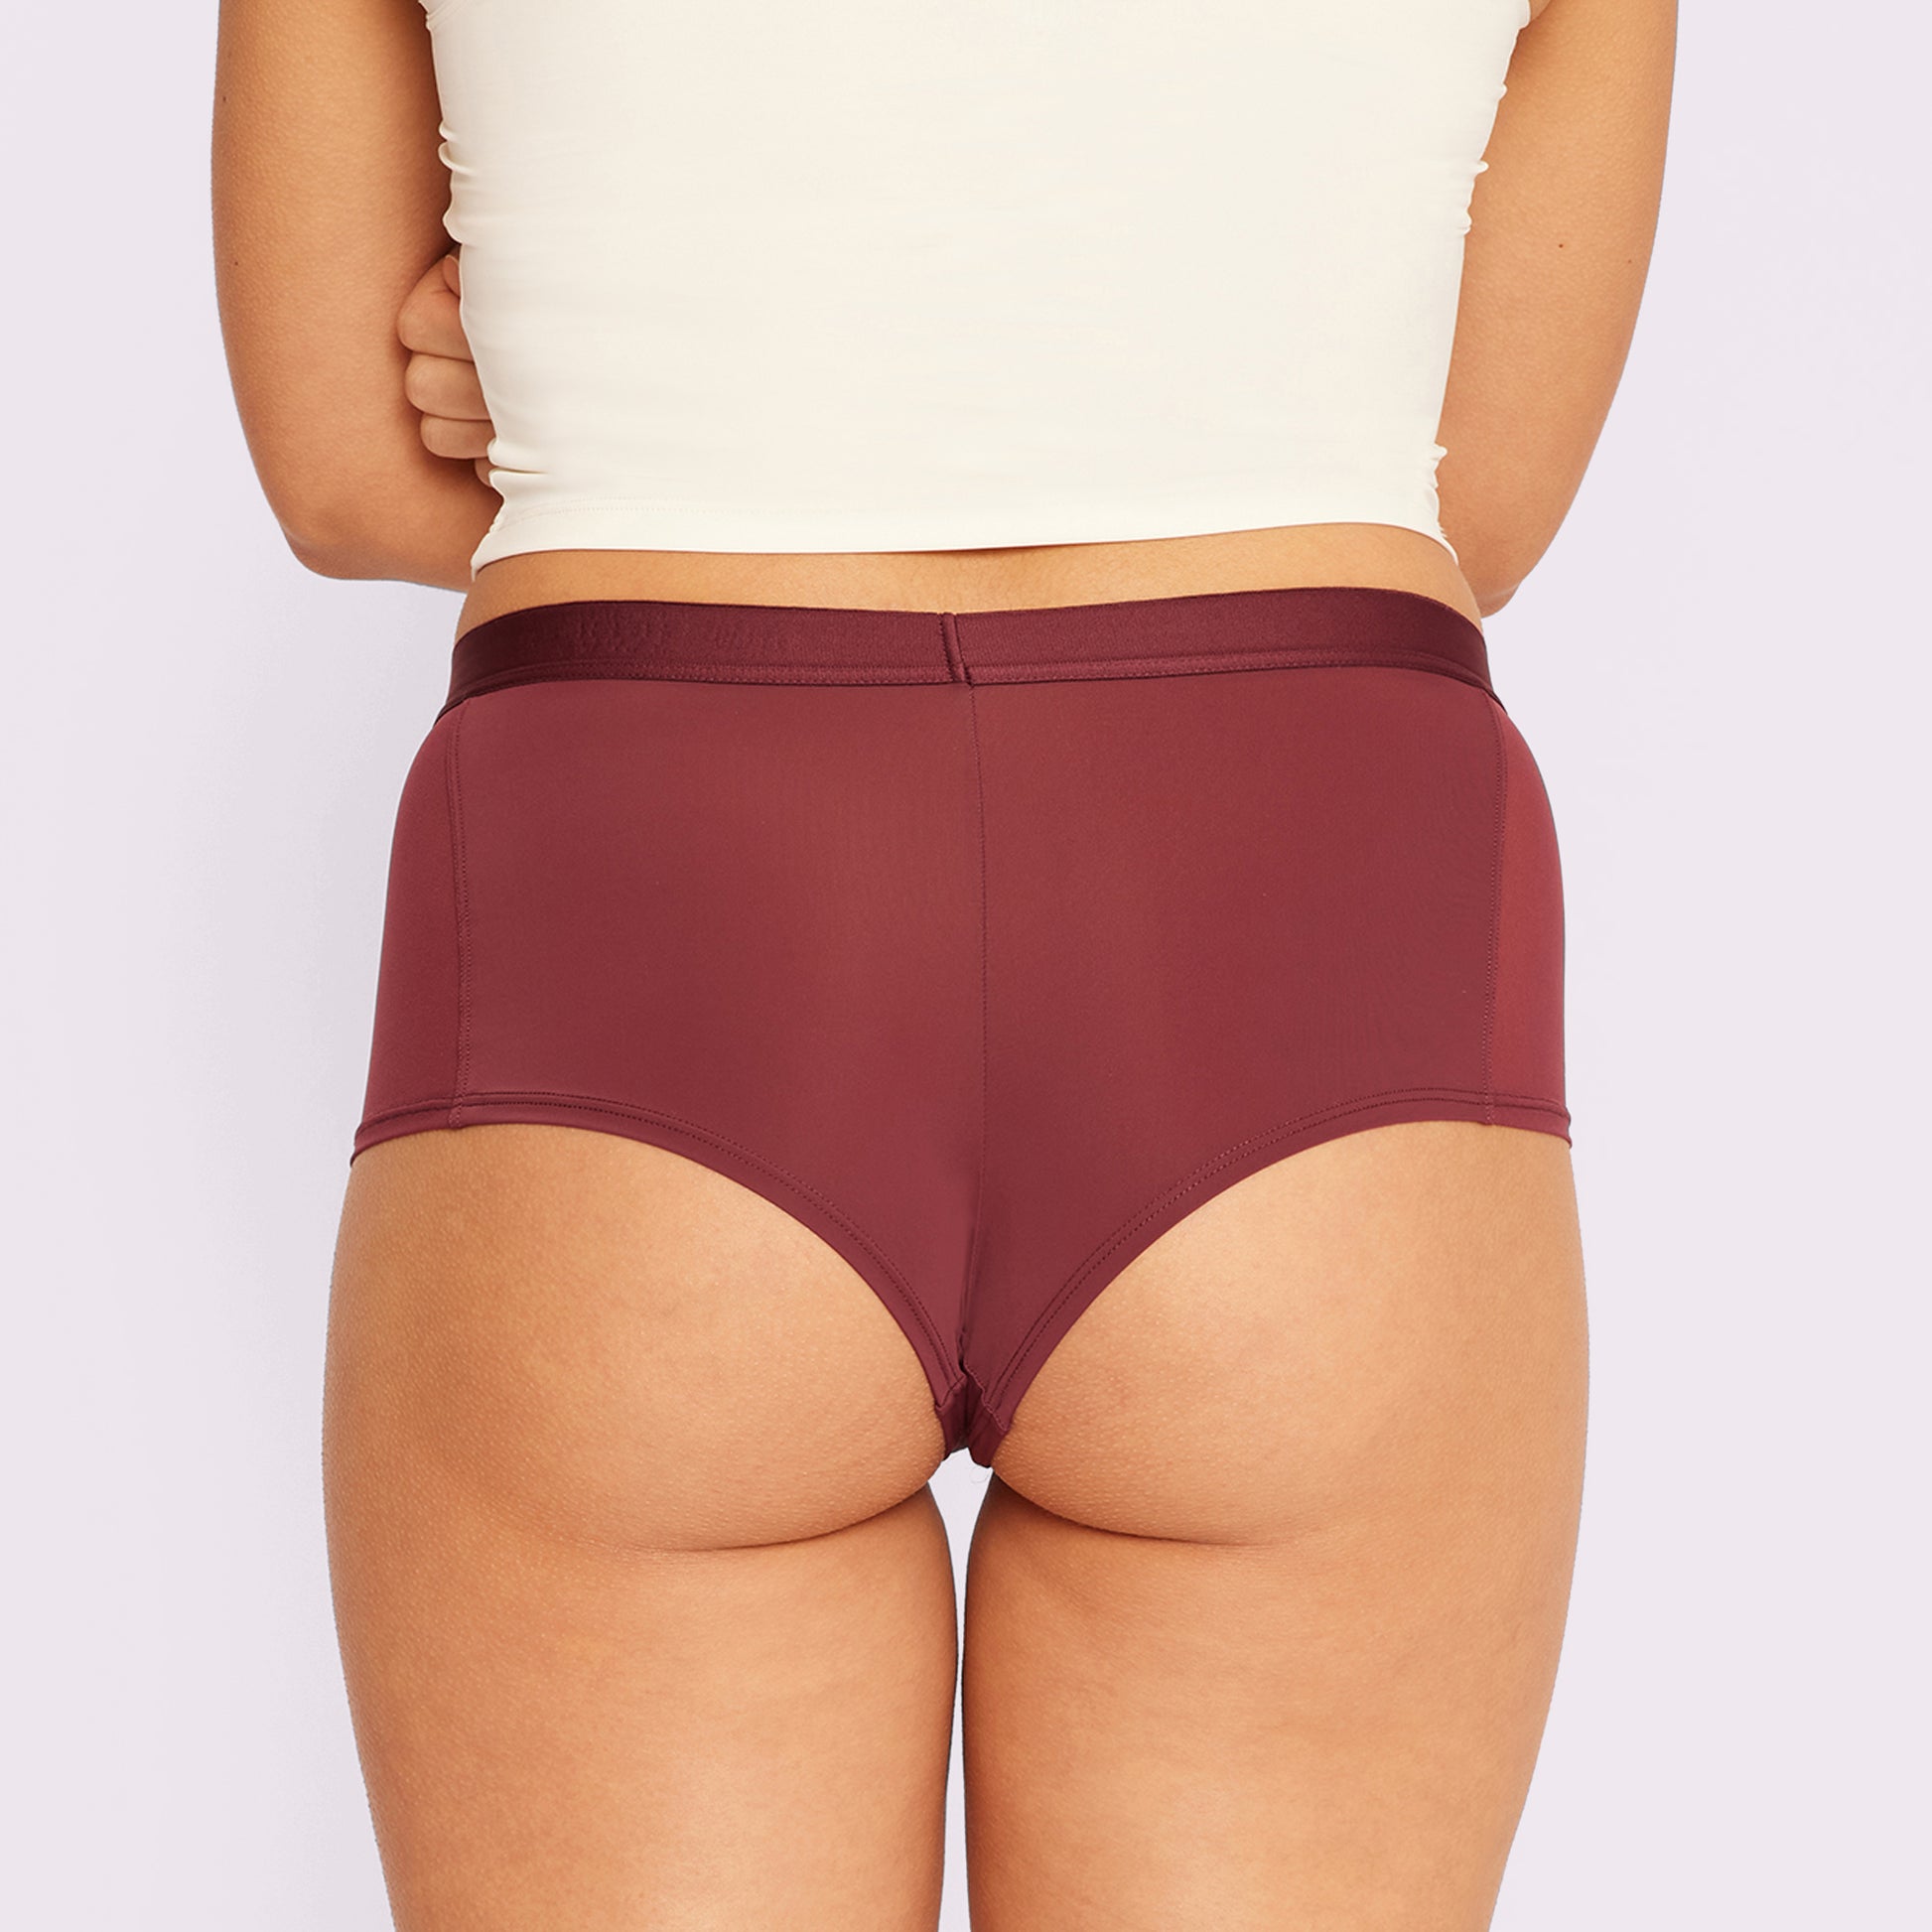 Trendlet: Boy shorts (for women)